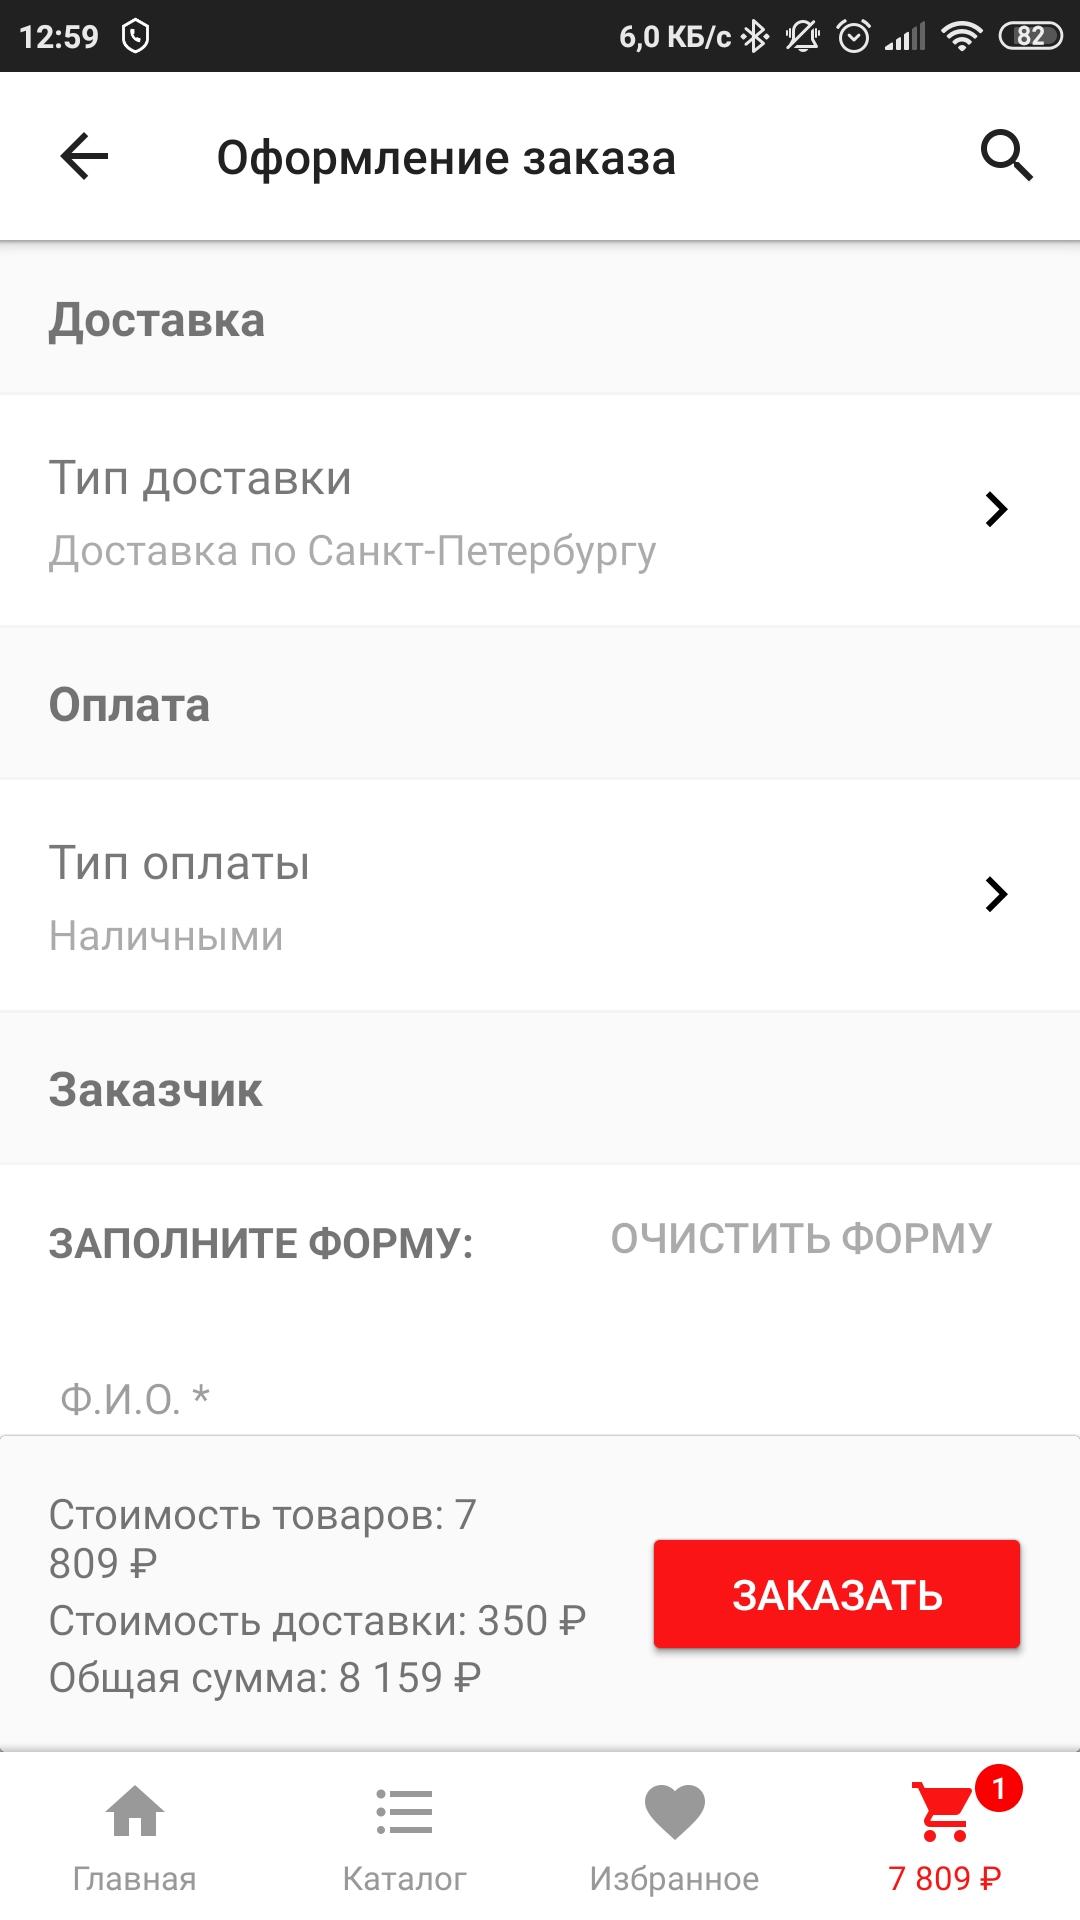 DTLshop.ru - detaling market 4.177.A.0 Screenshot 14